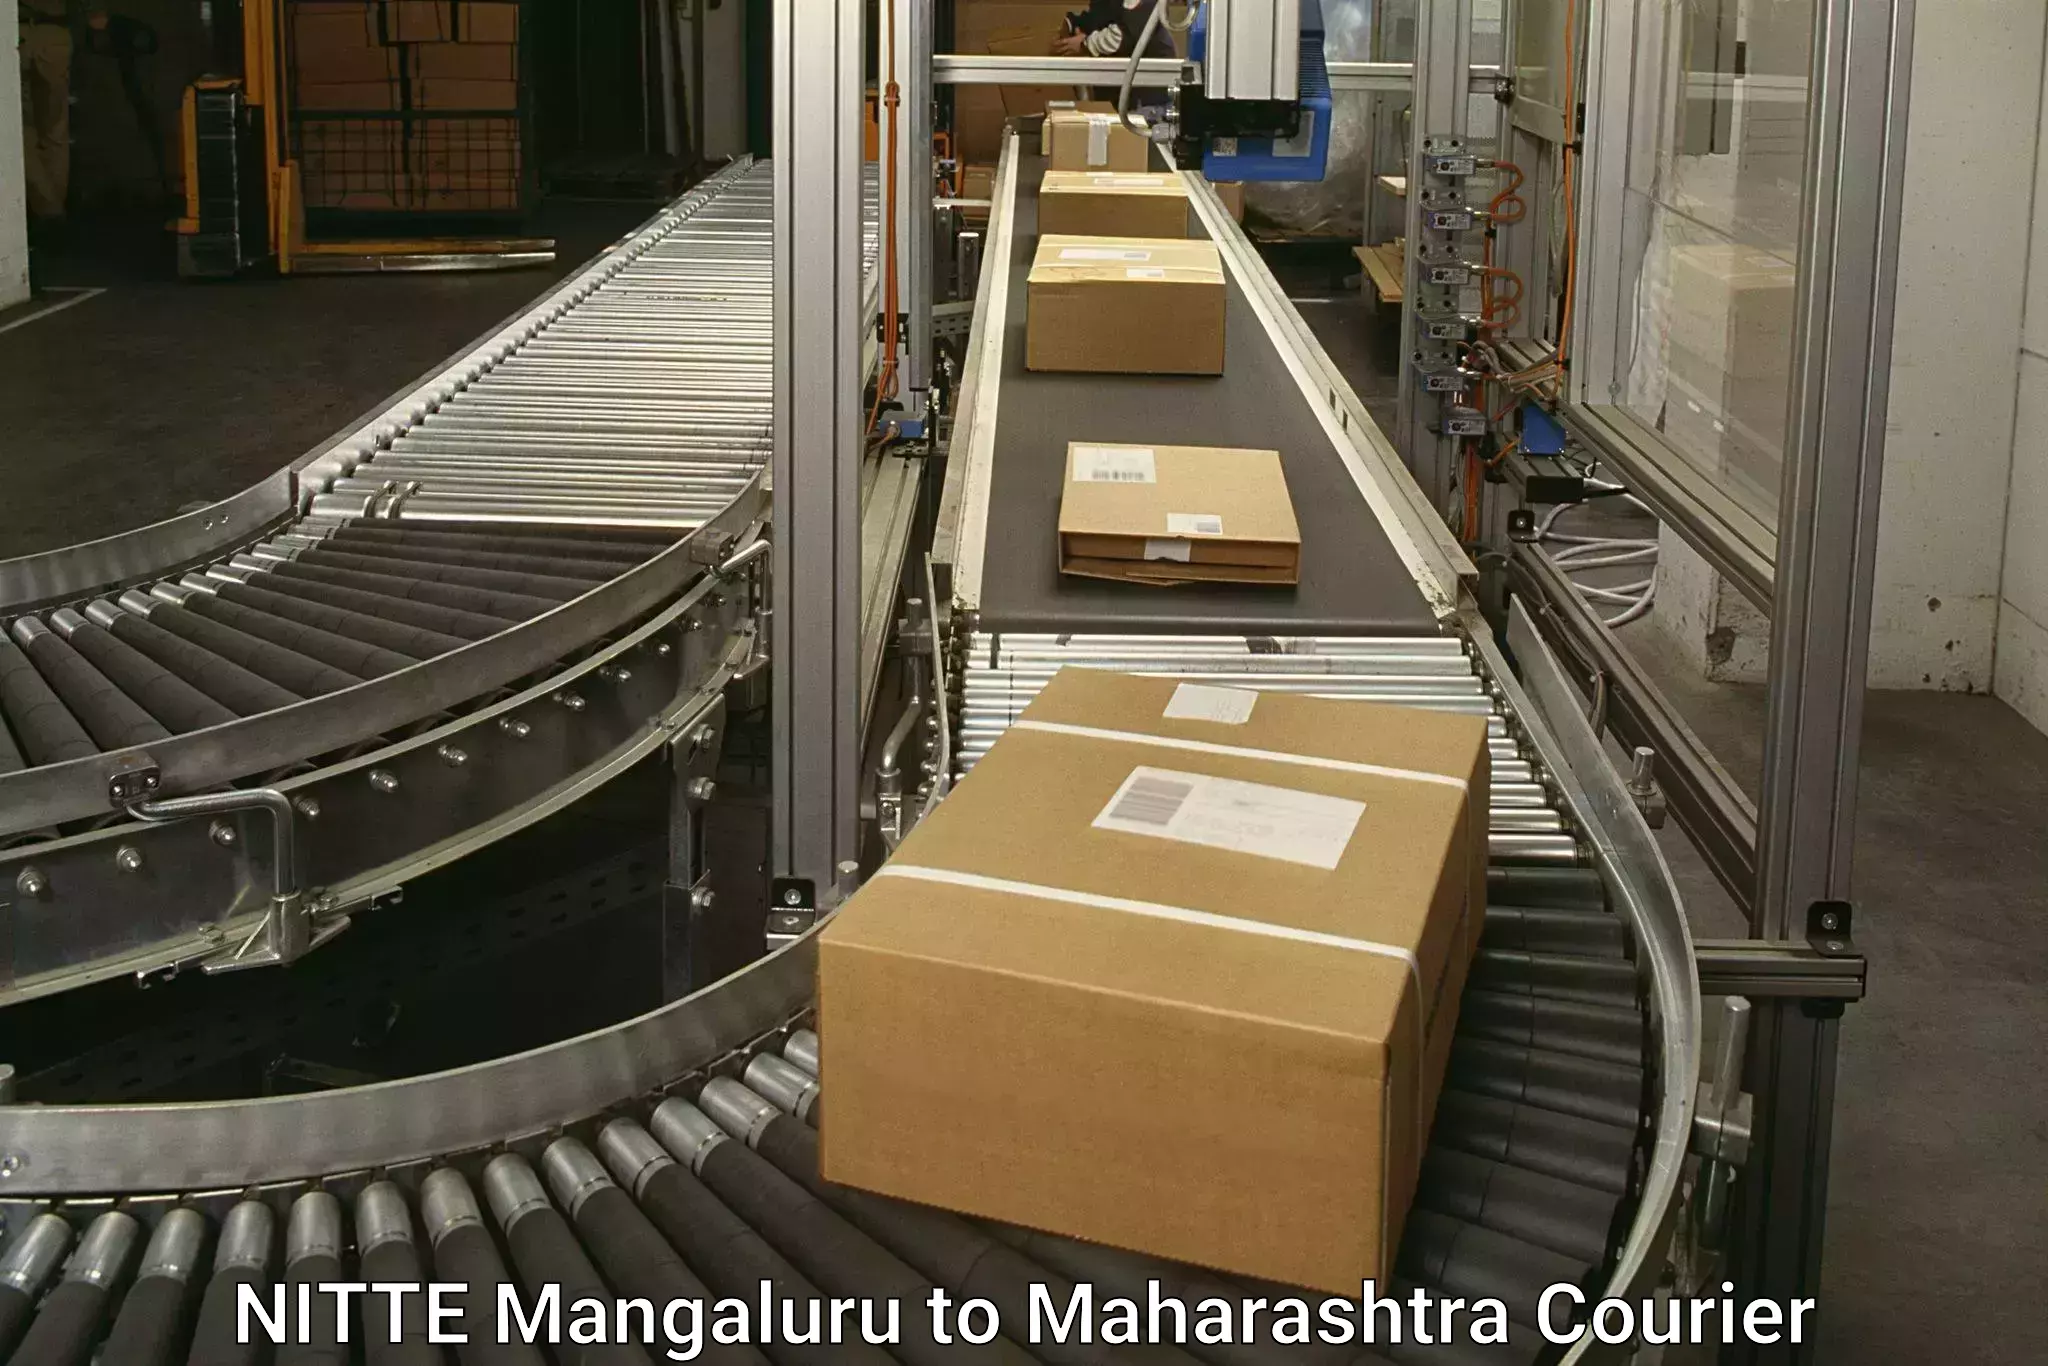 State-of-the-art courier technology NITTE Mangaluru to Brahmapuri